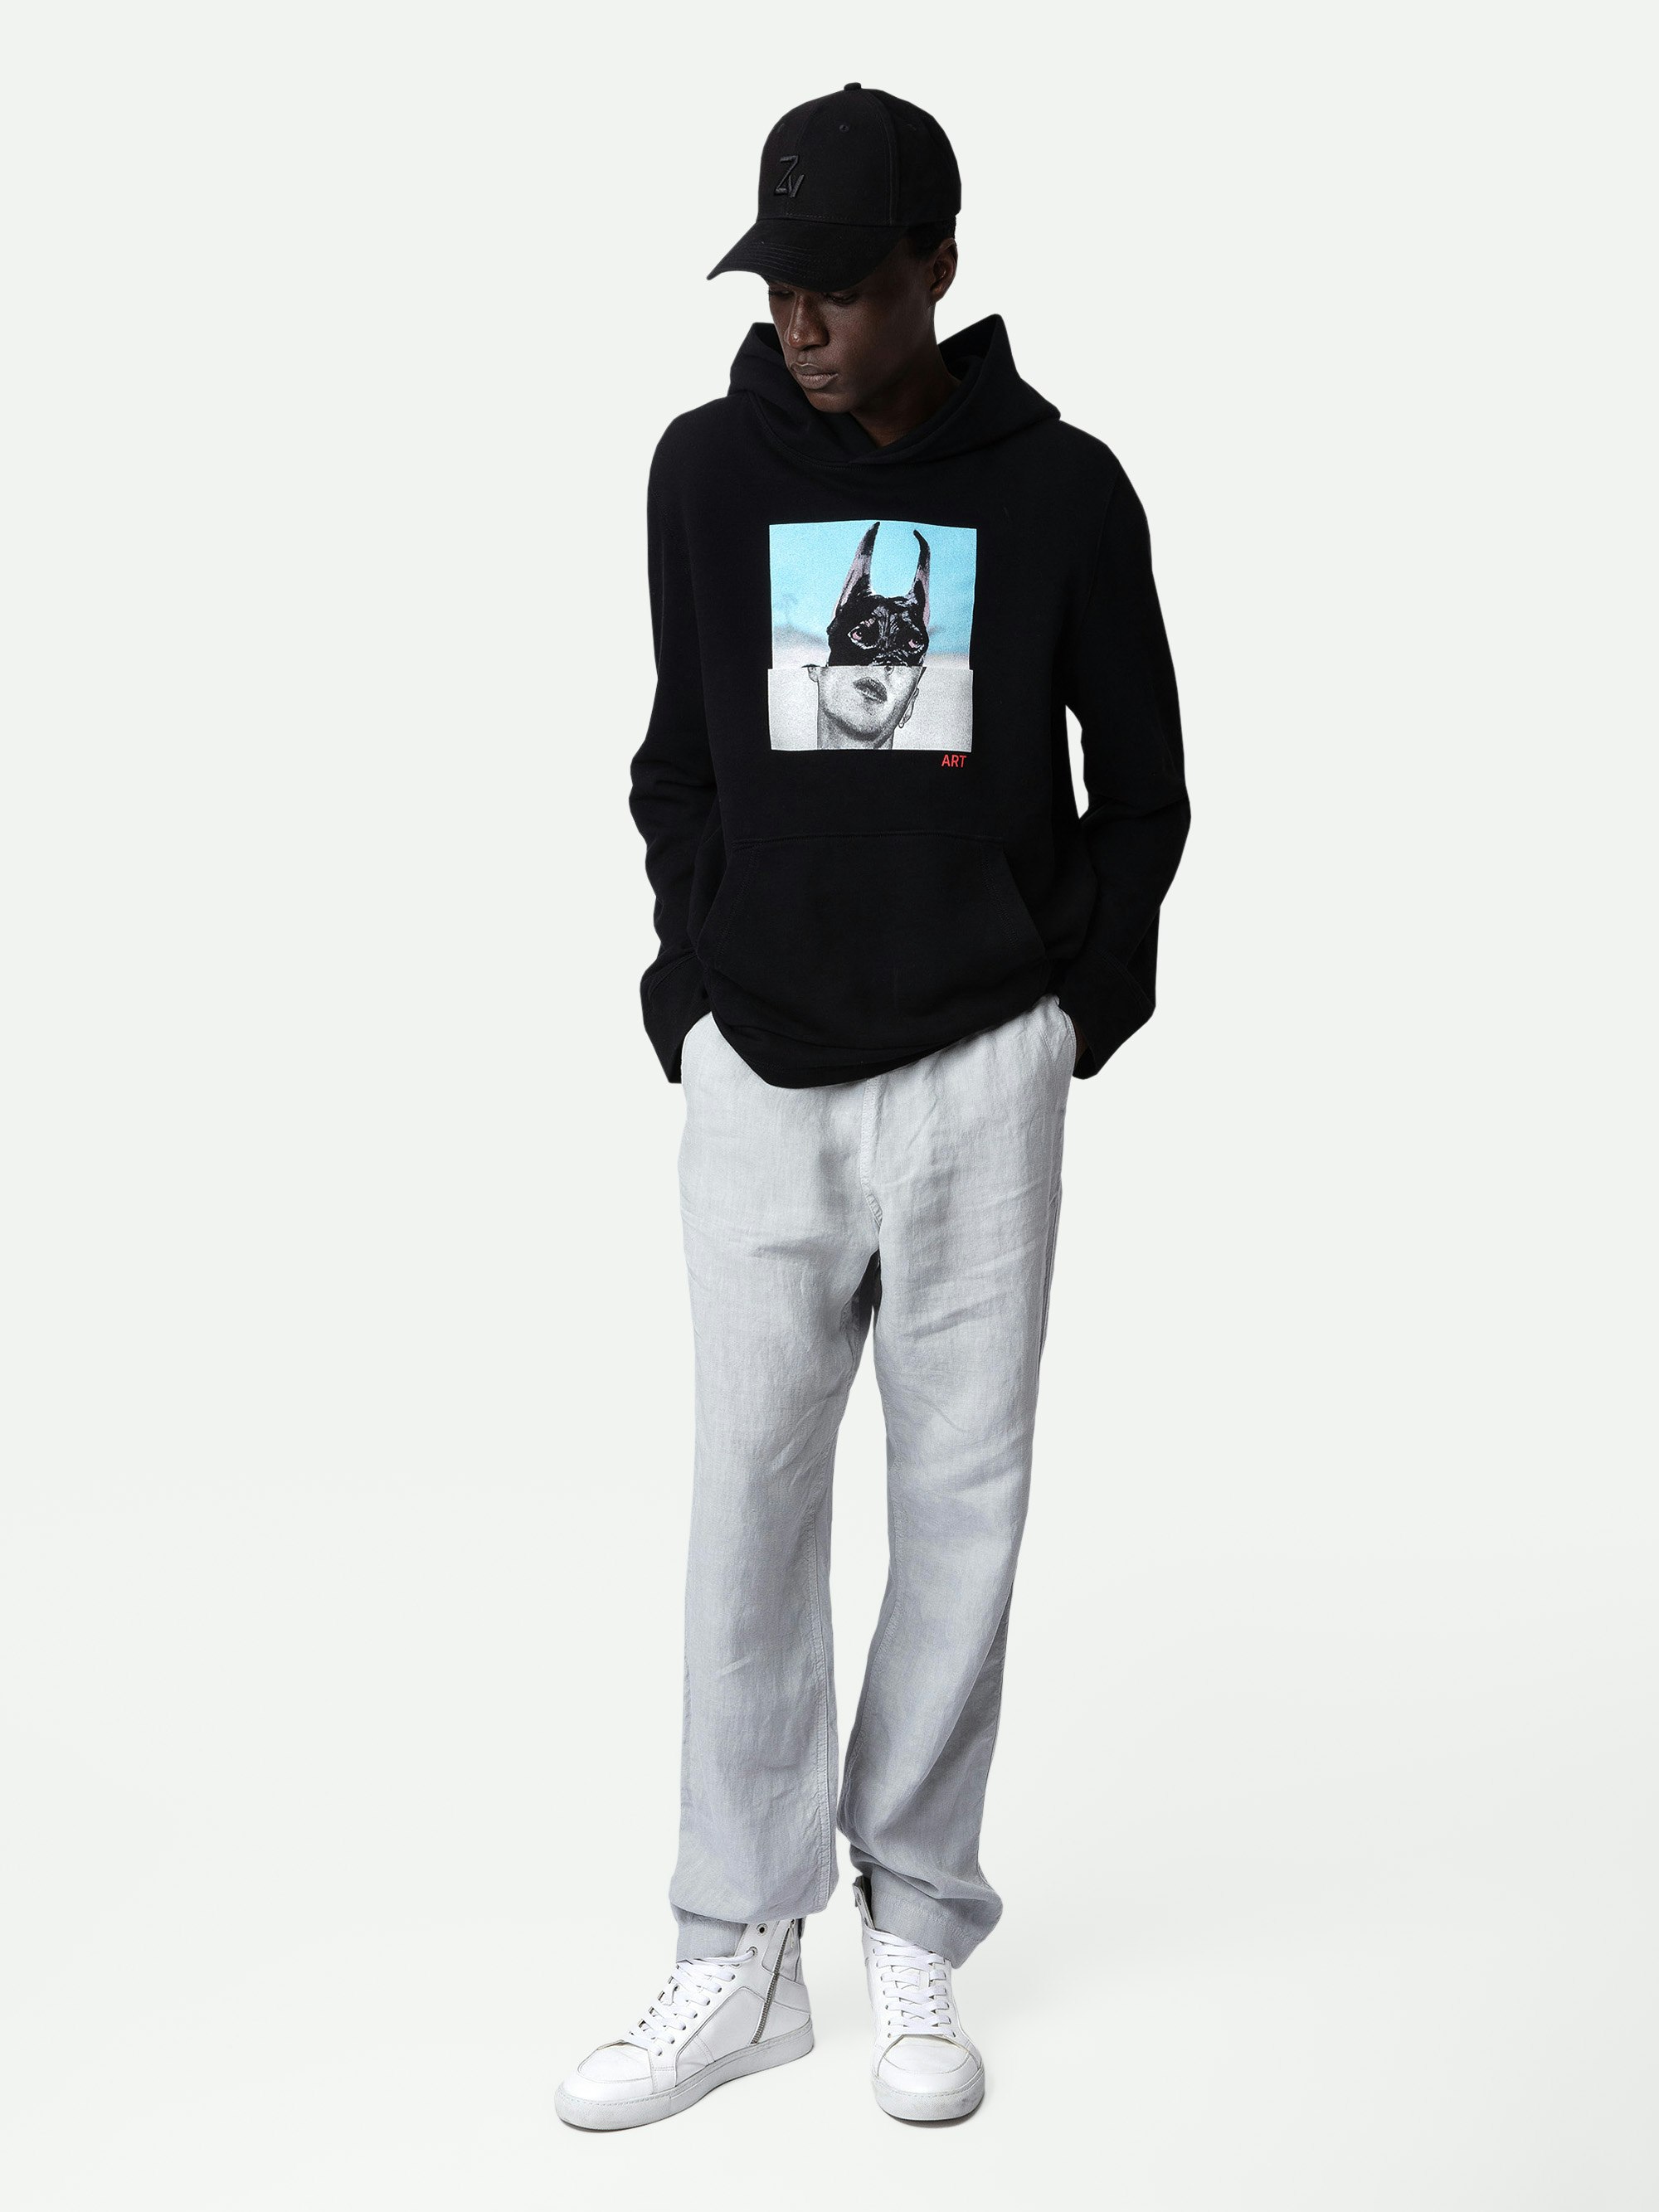 Sancho Photoprint Sweatshirt - Men's black hoodie with photo print on front.